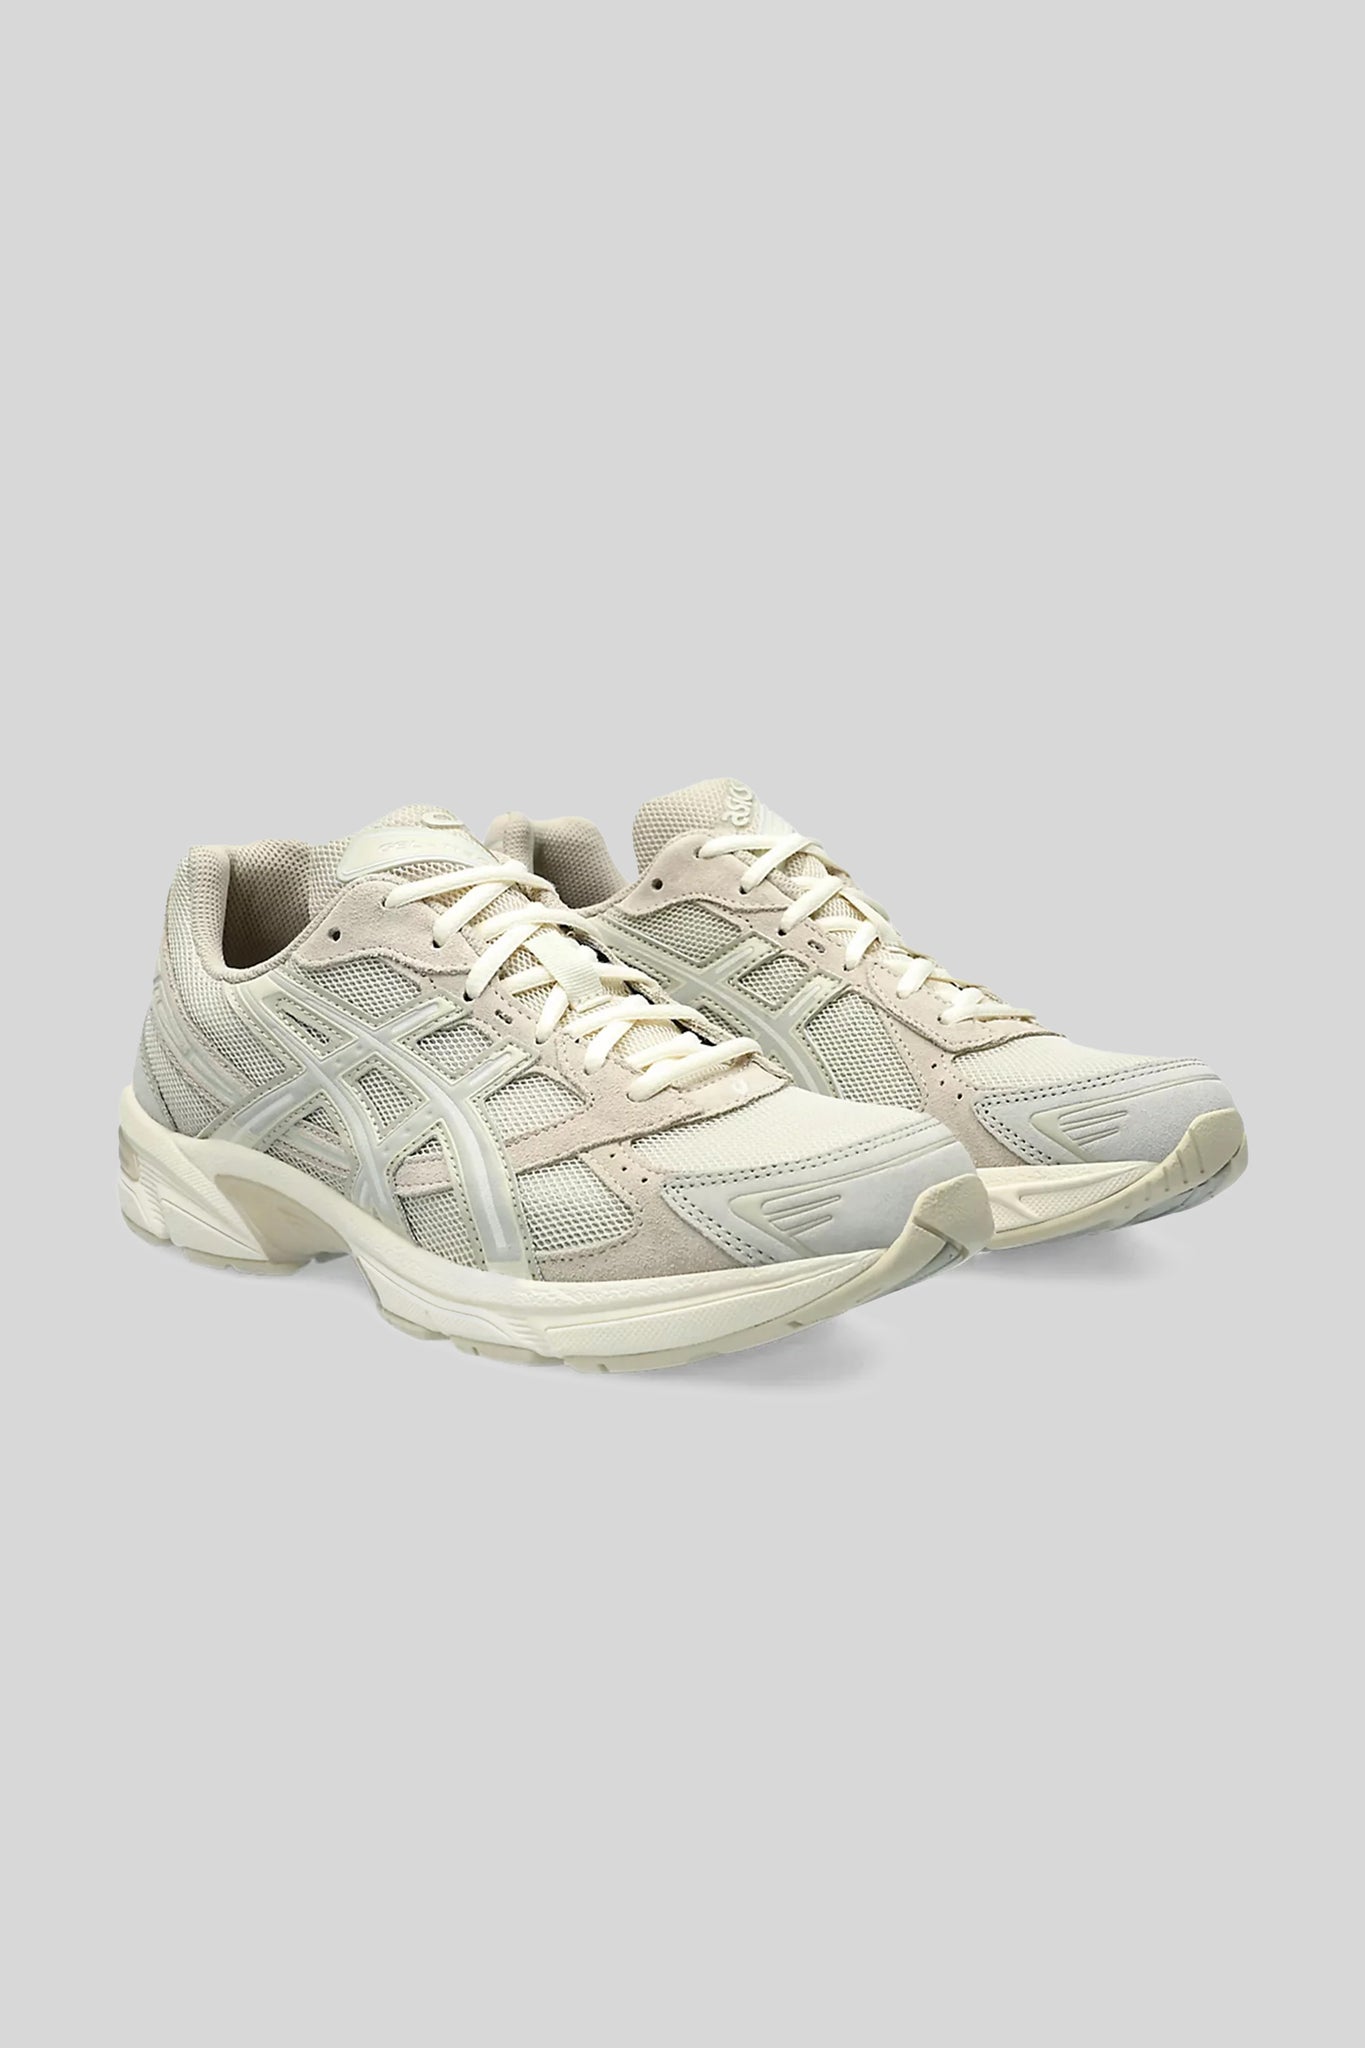 ASICS Men's Gel-1130 Sneaker in Vanilla/White Sage